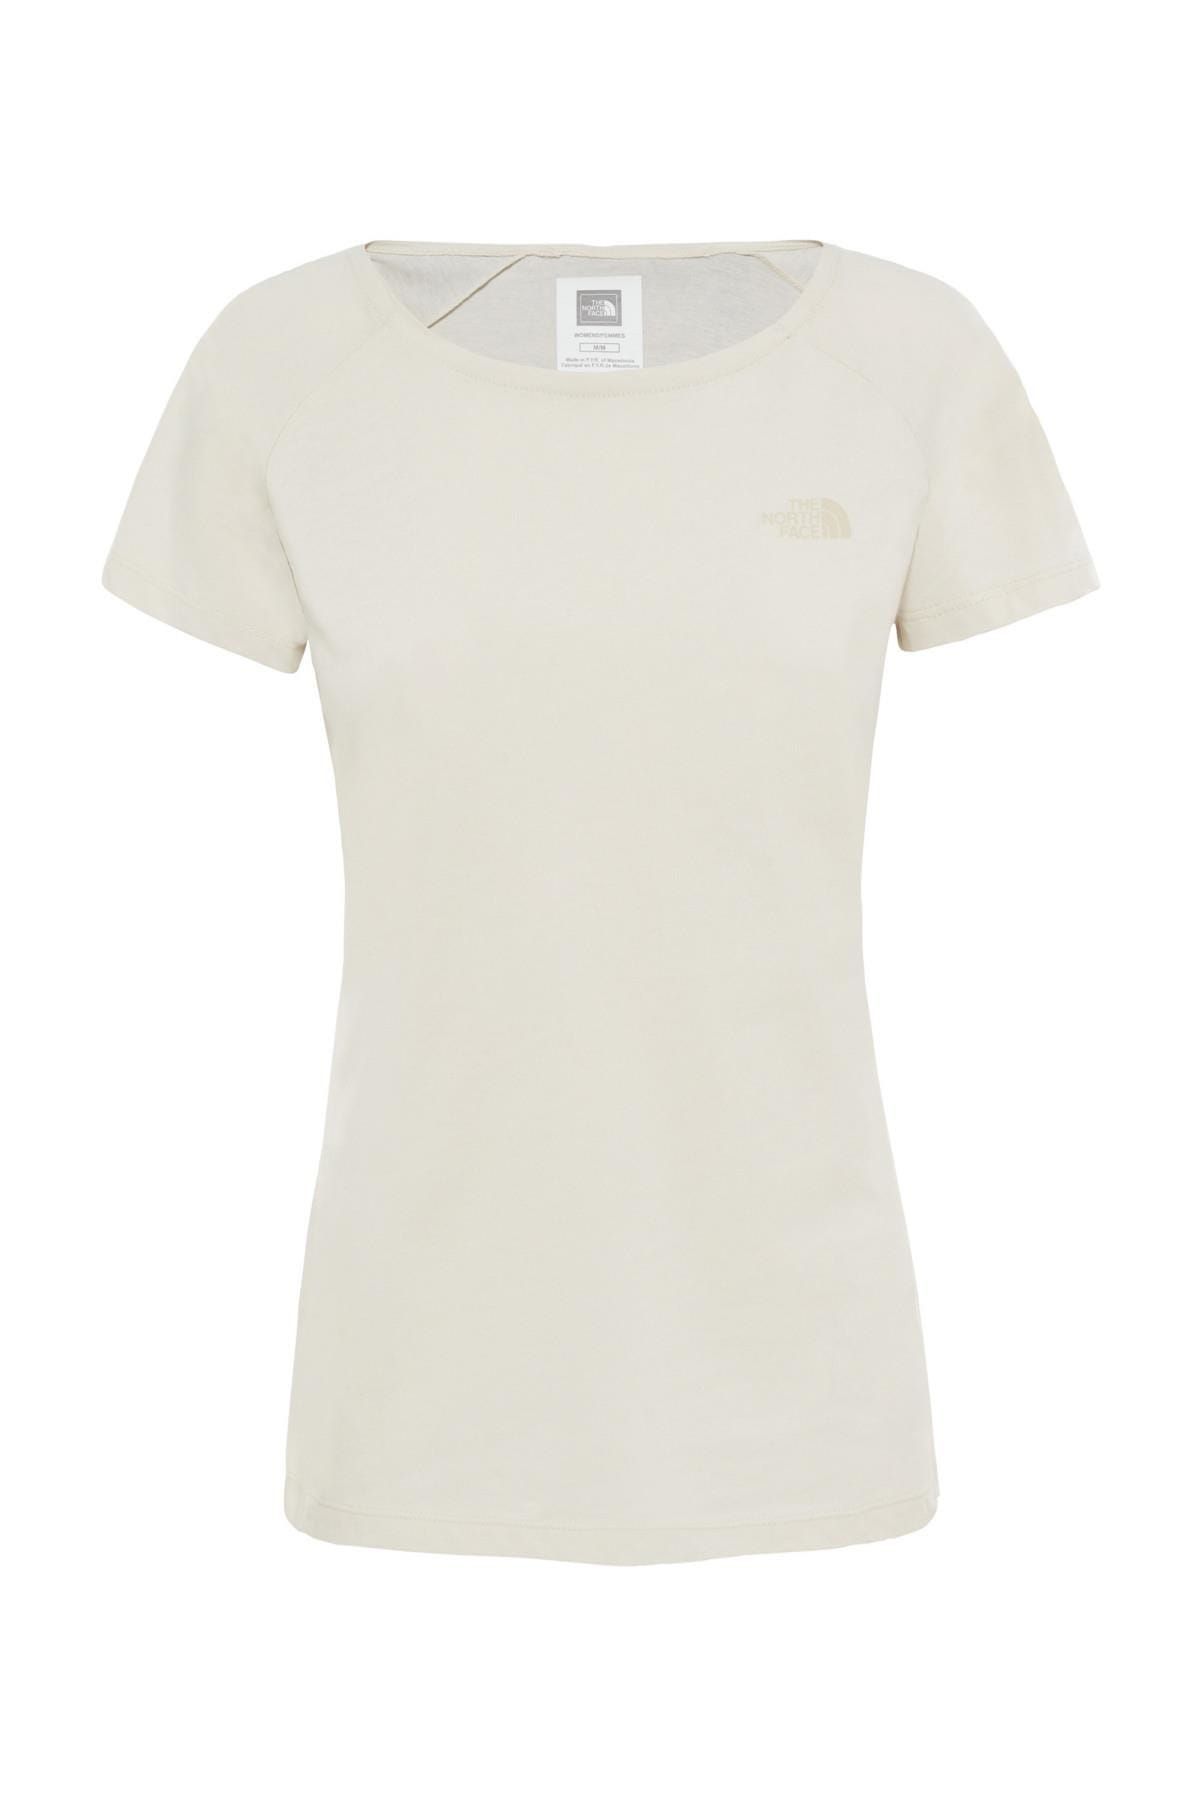 The North Face Raglan Simple Dome Kadın T-Shirt Beyaz